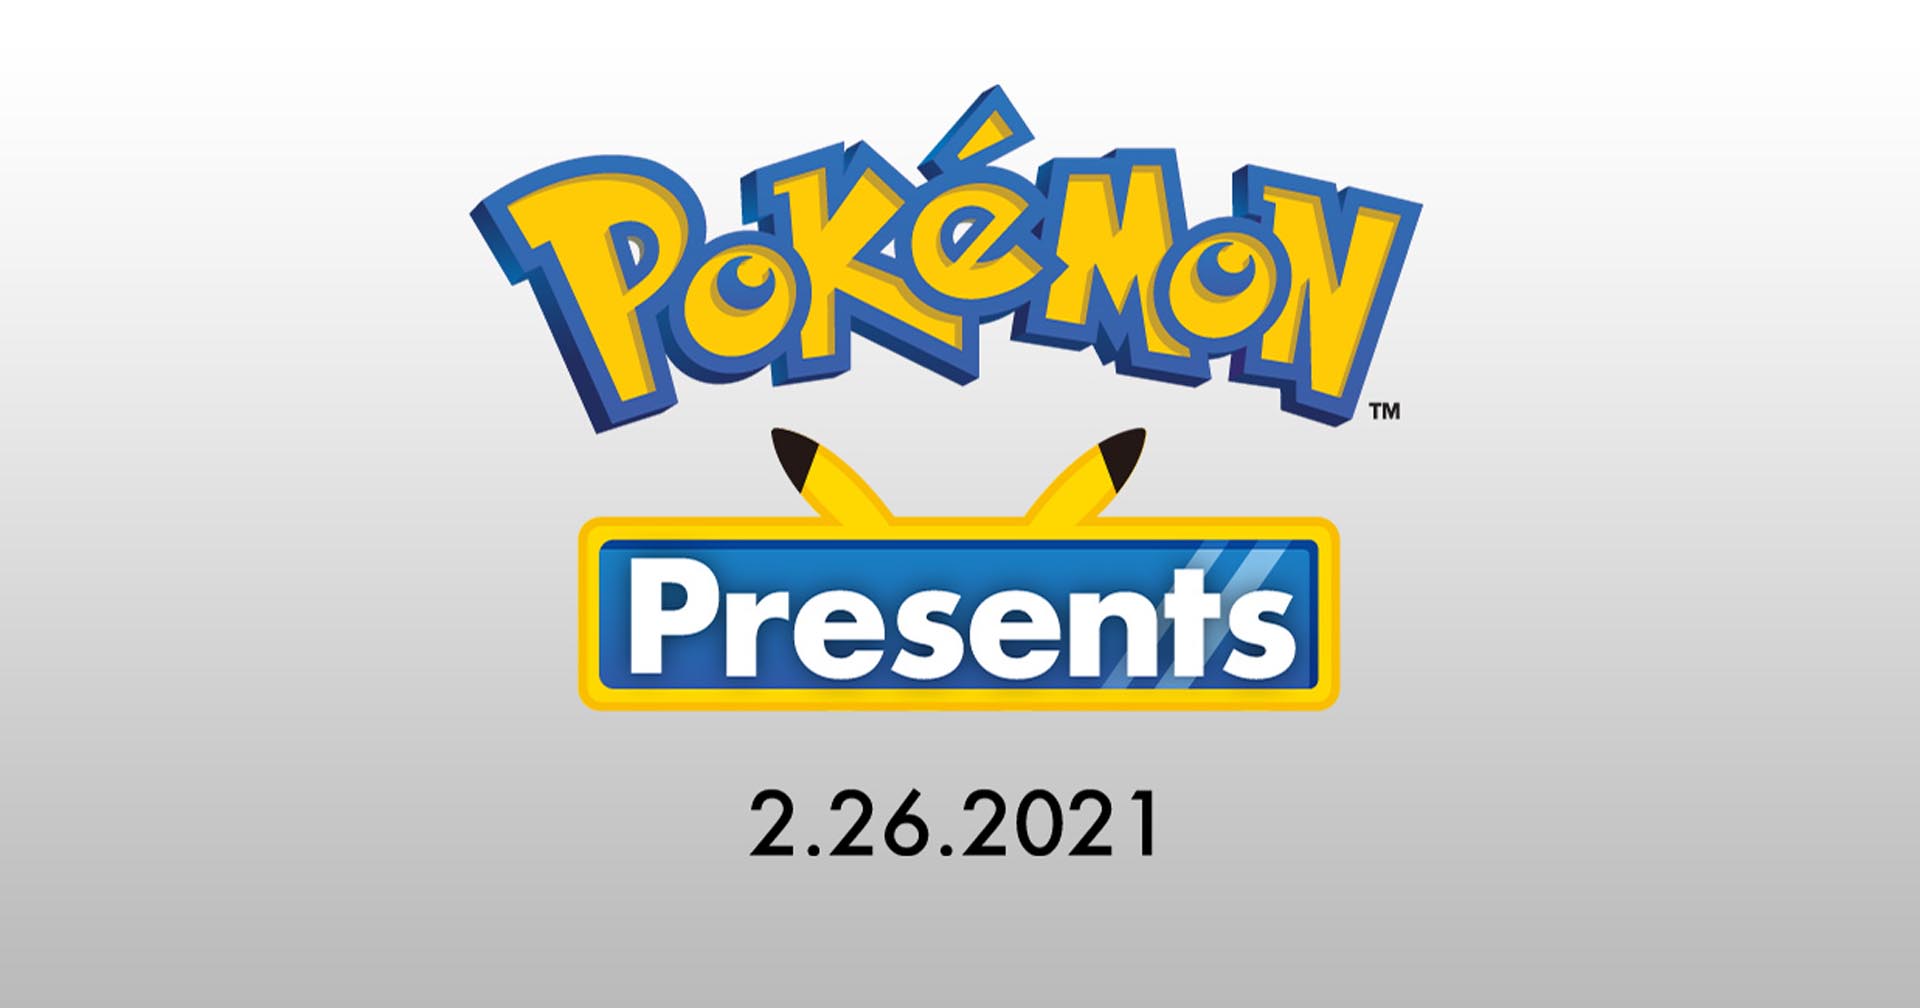 Pokemon Presents 2021: เผยเกมใหม่ฉลองครบรอบ 25 ปี Pokemon